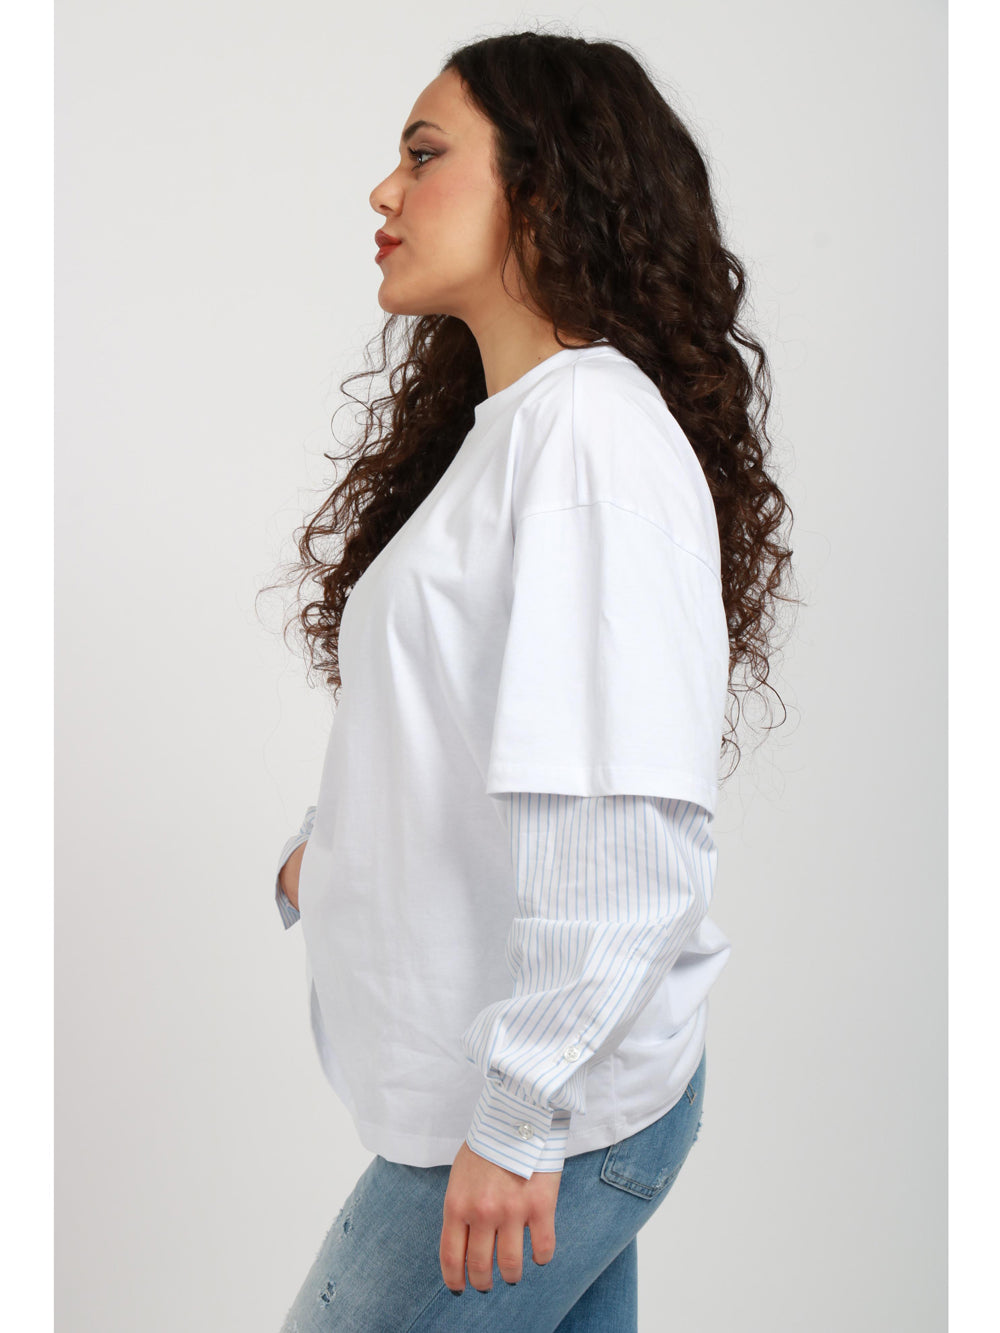 SEMICOUTURE T-Shirt Stefania in Cotone Bianca con Maniche in Popeline Bianco